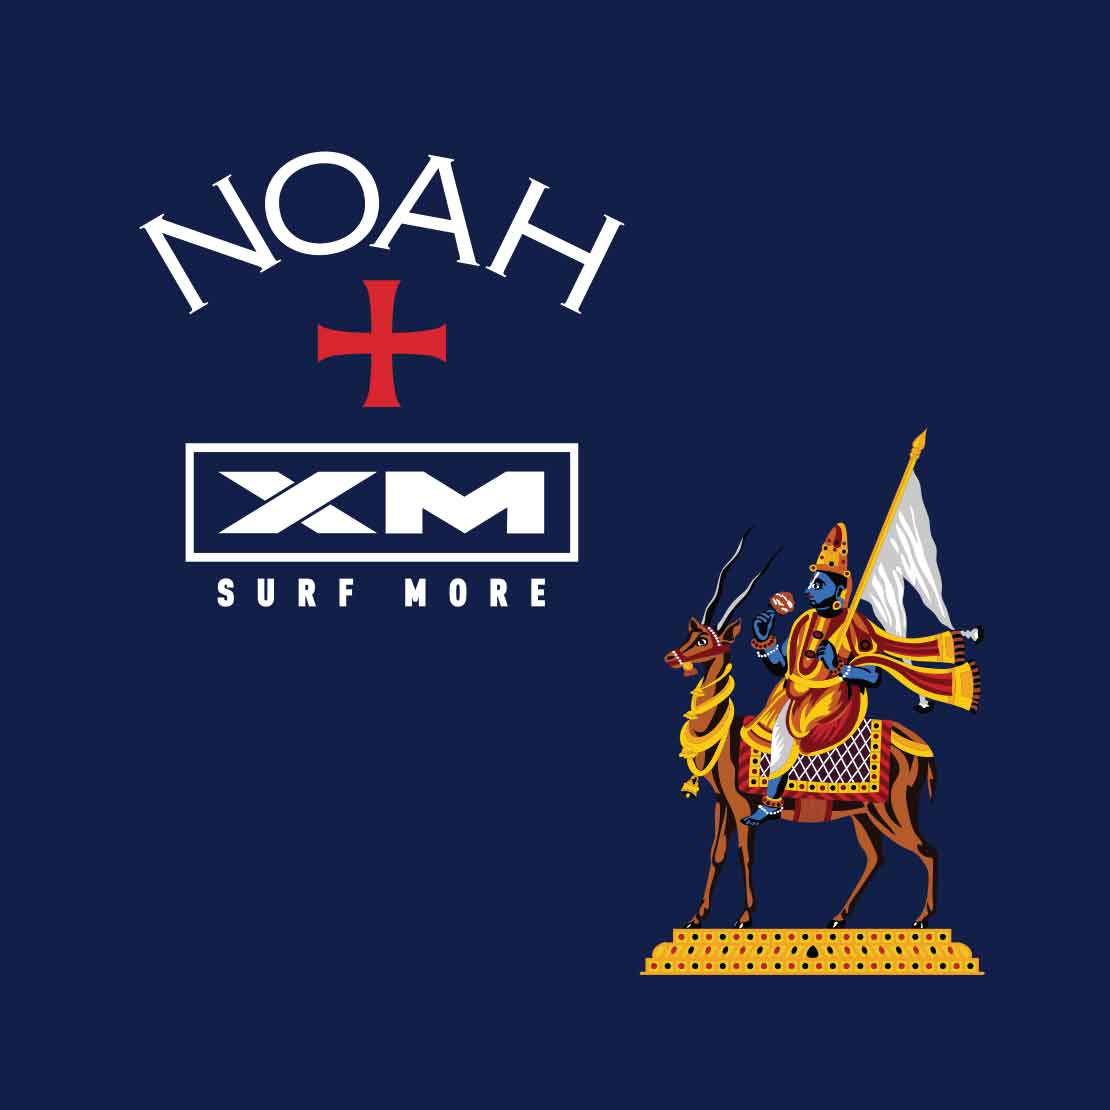 XM x NOAH